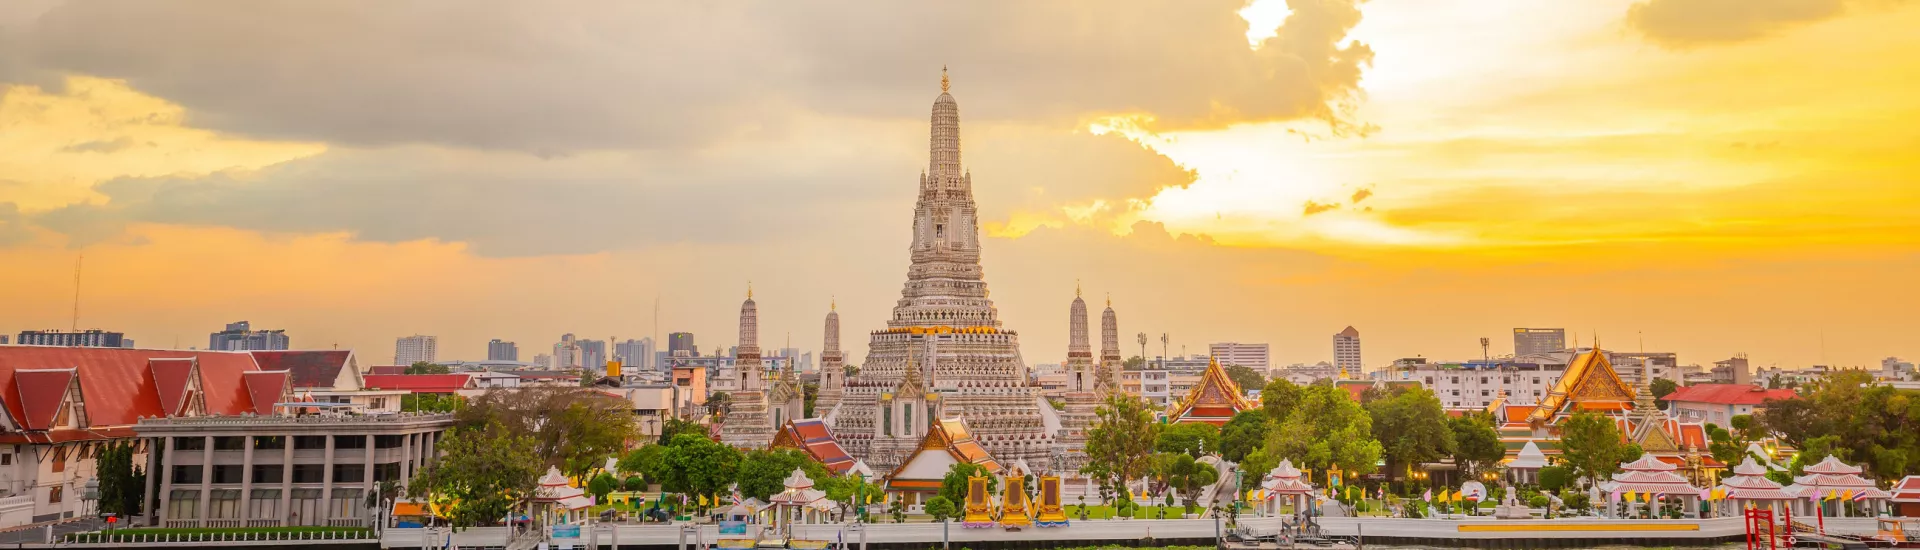 Wat Arun, ein Tempel in Bangkok